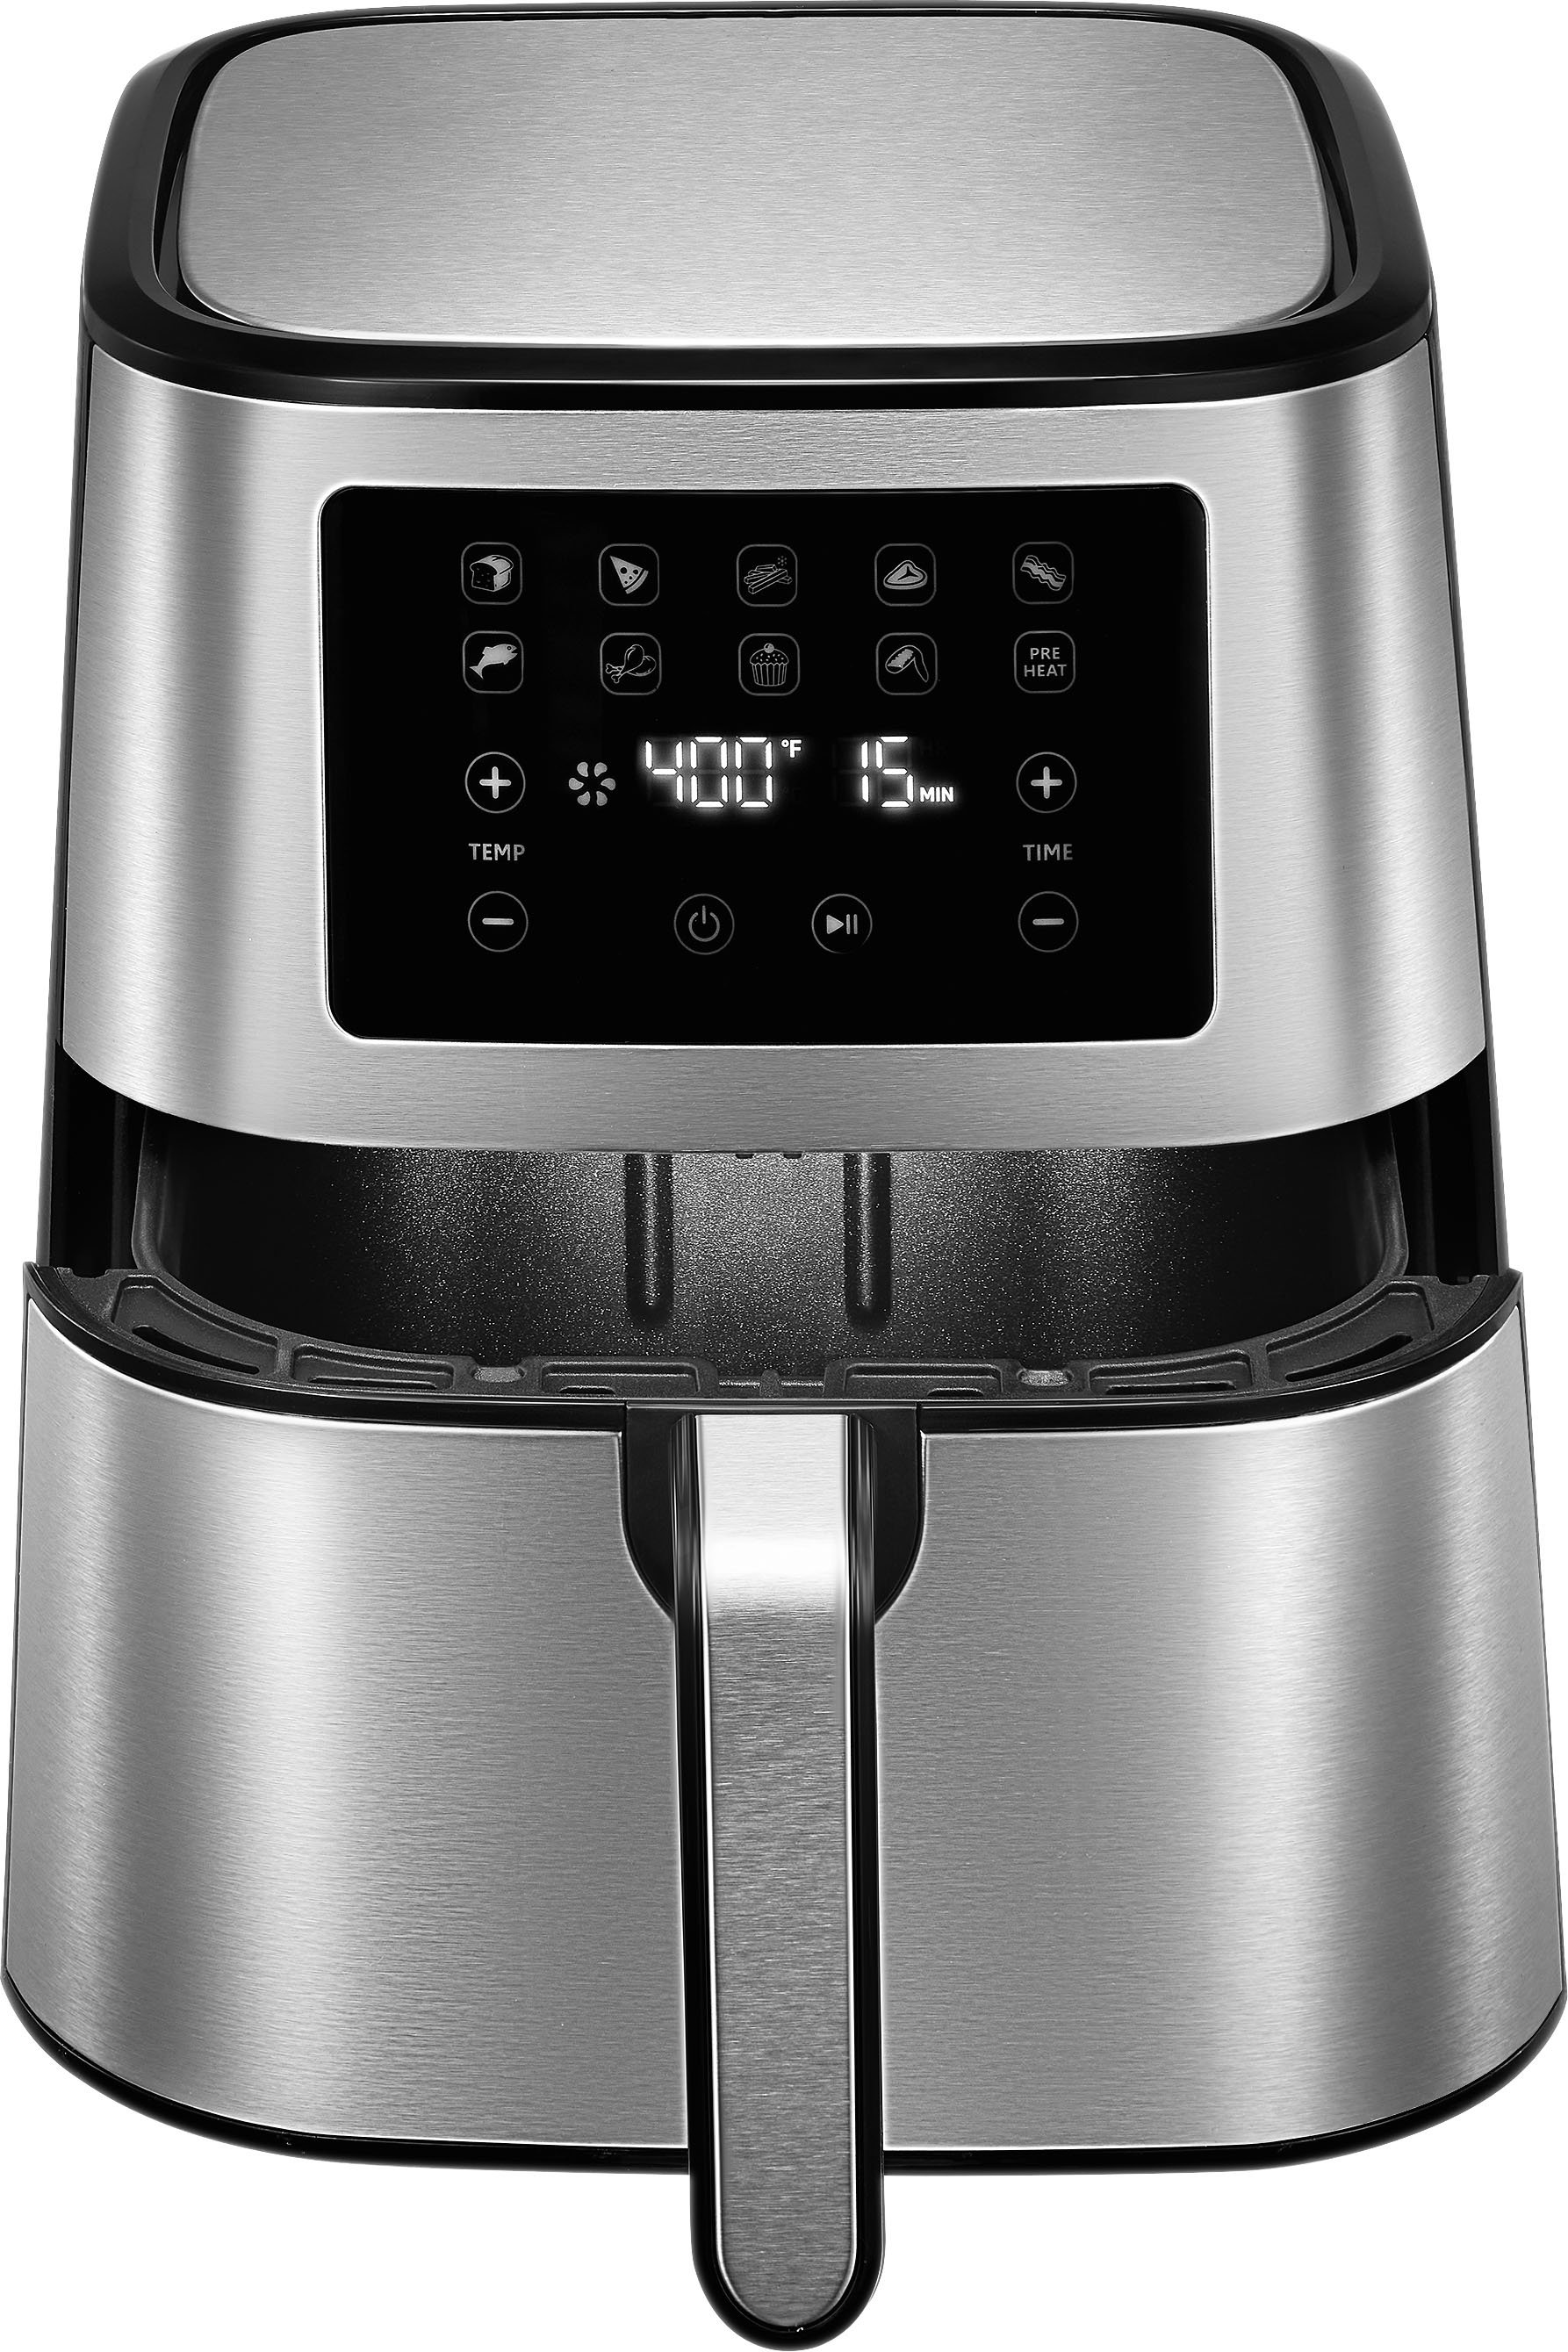 Best Buy: Insignia™ 5 Qt. Digital Air Fryer Stainless Steel NS-AF5DSS2